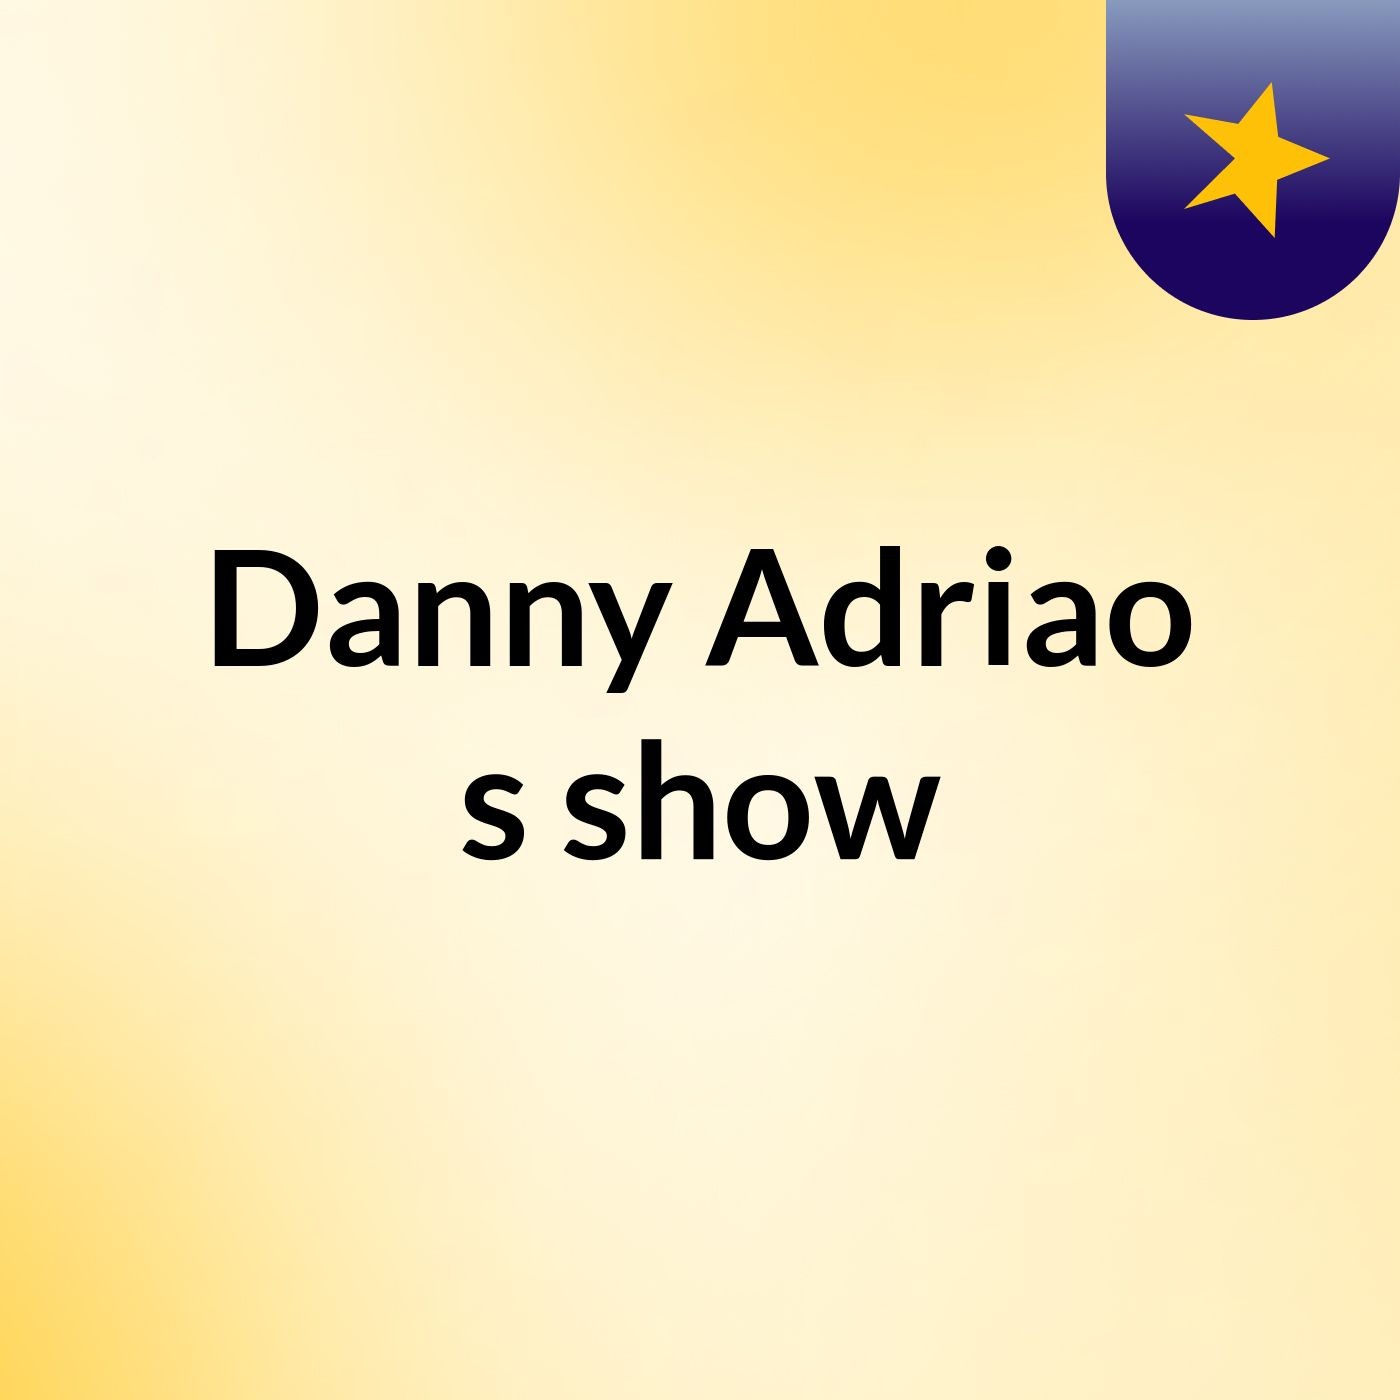 Danny Adriao's show